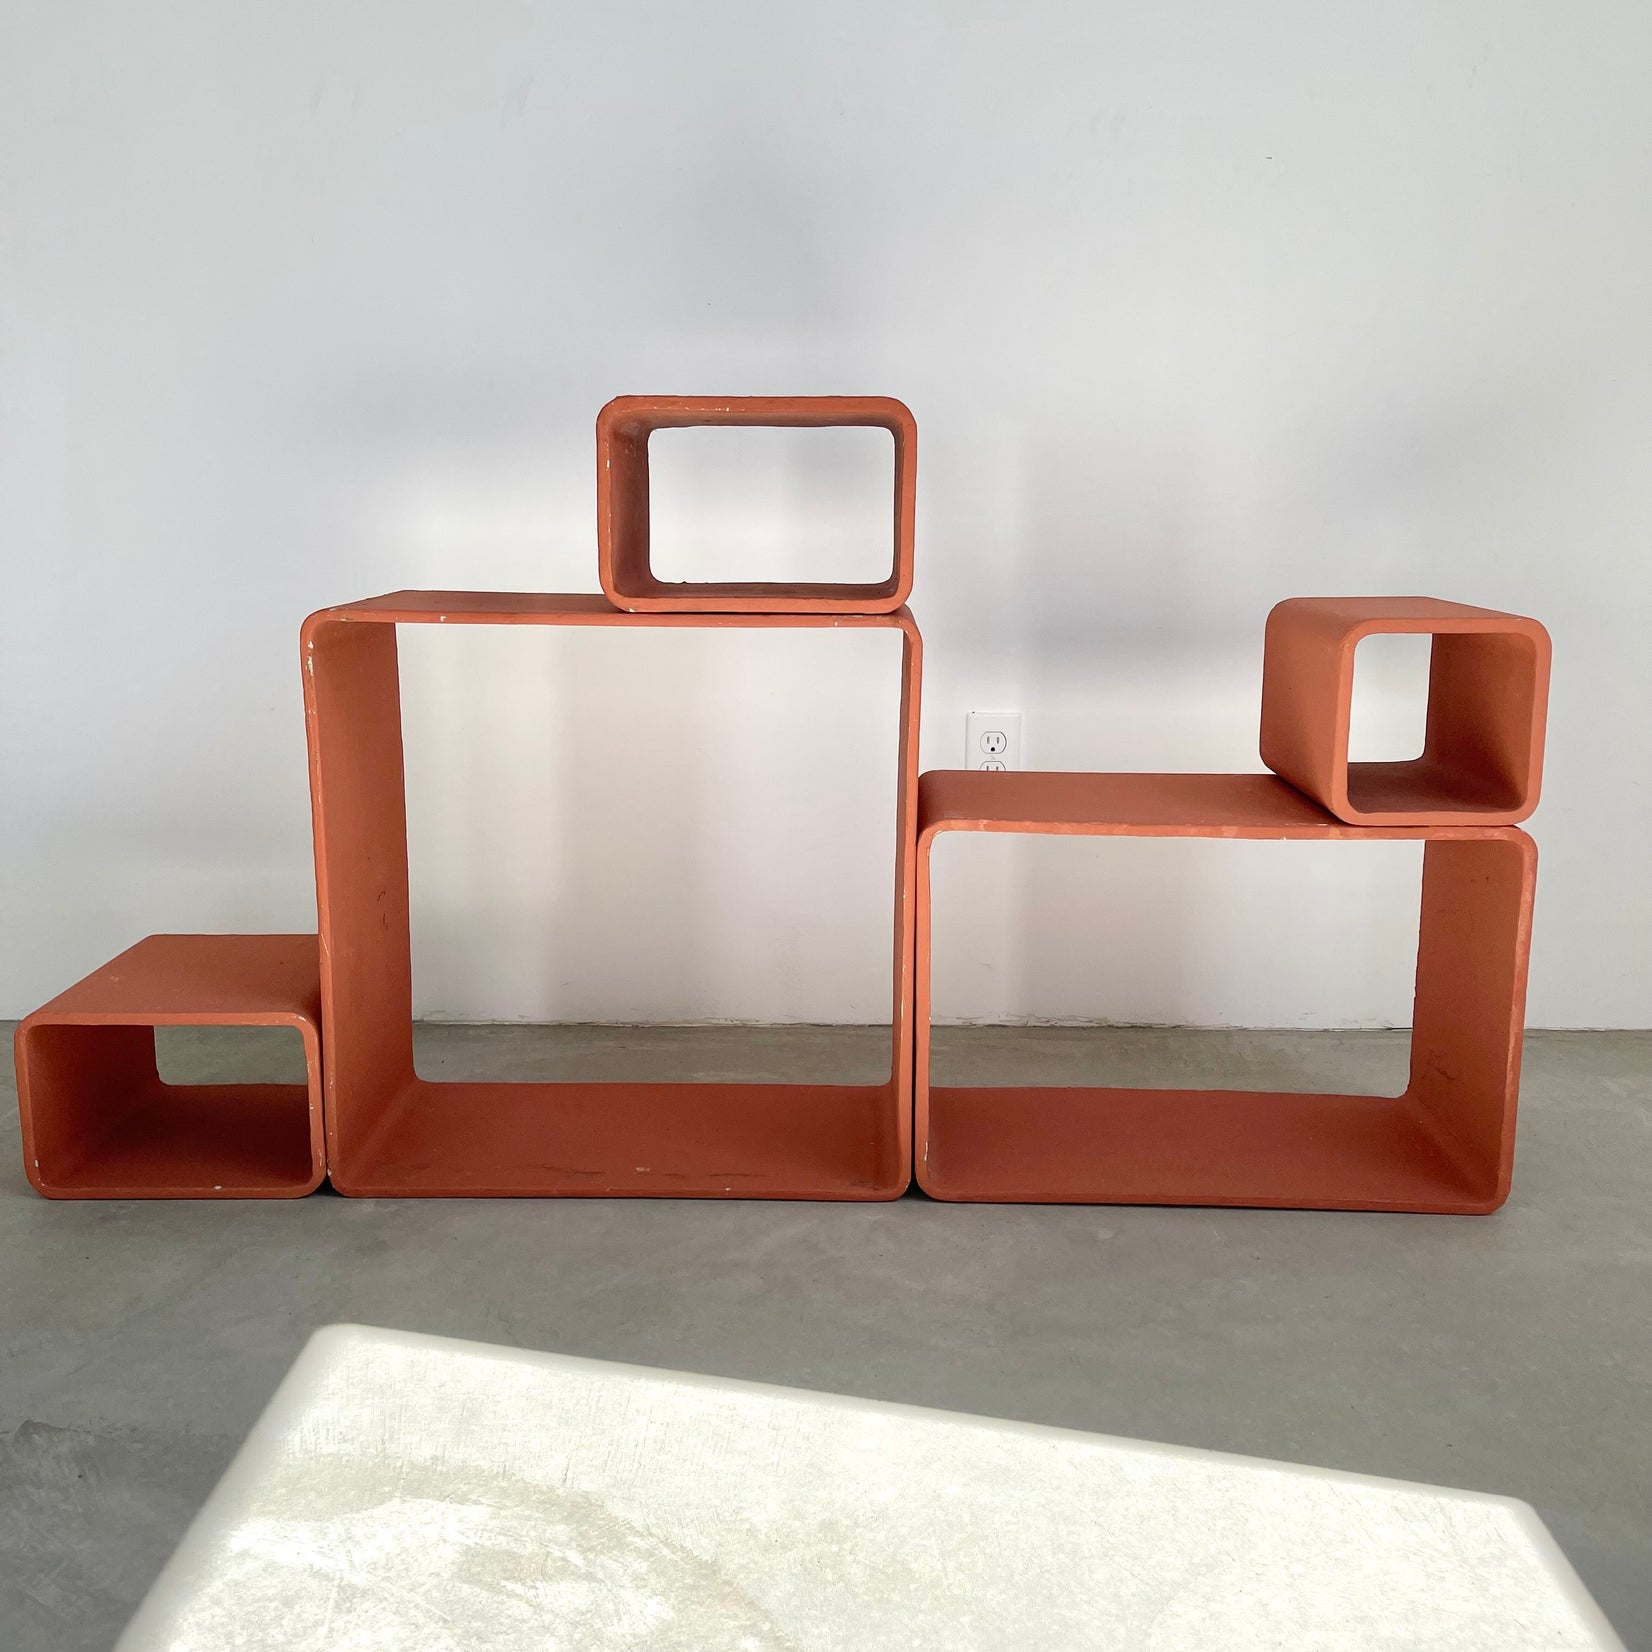 Willy Guhl Orange Concrete Bookcase